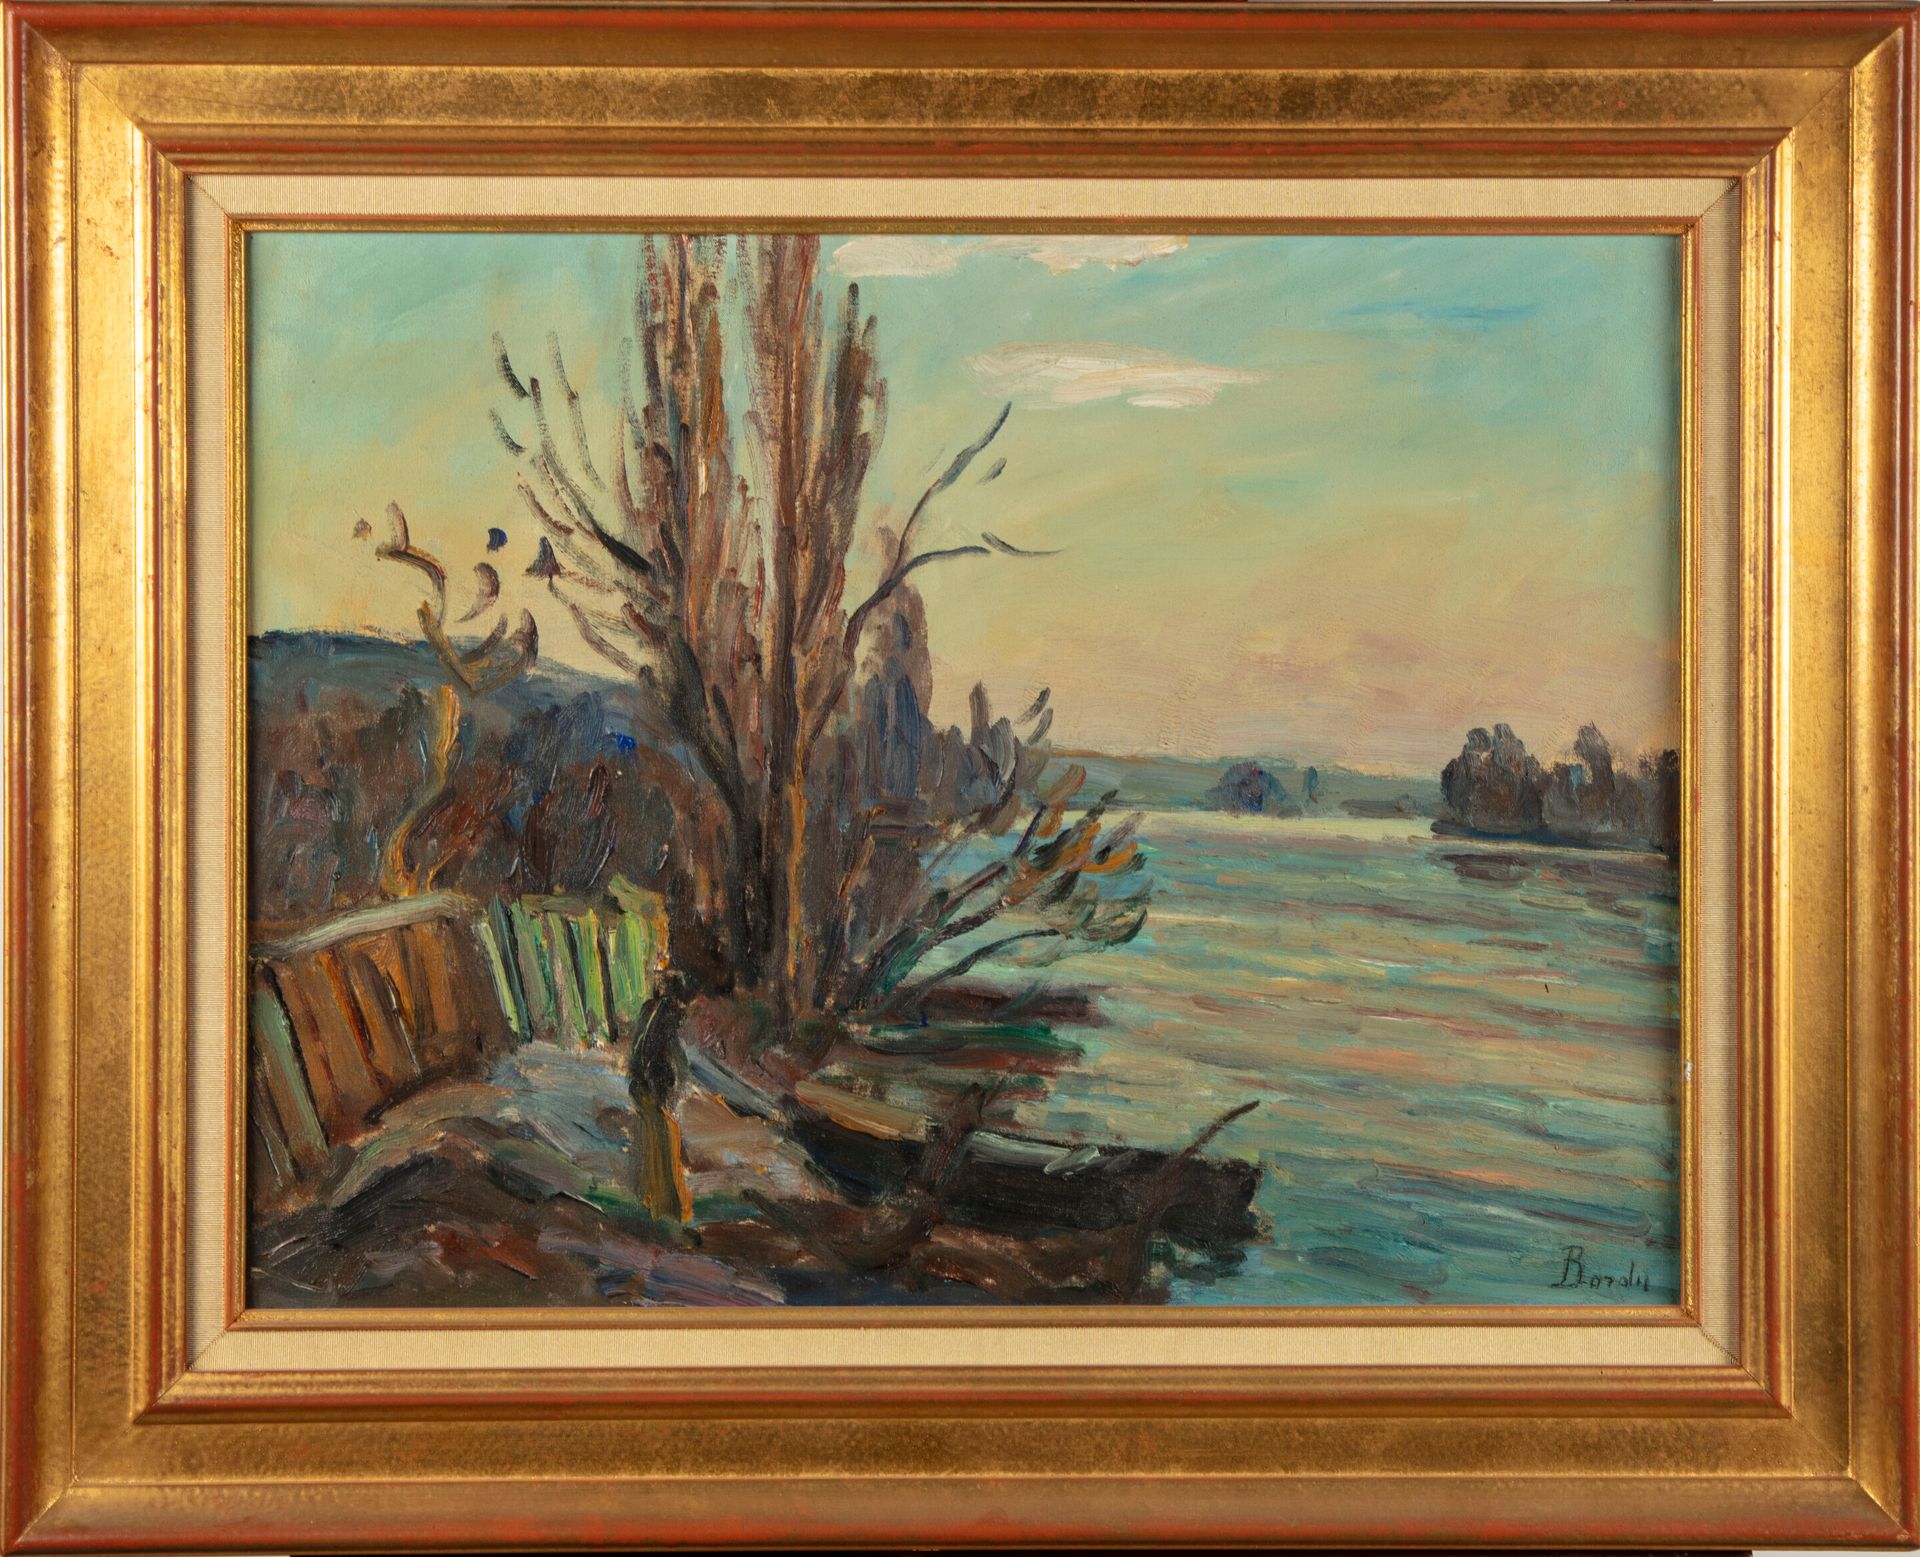 Null 莱昂纳尔-博尔德(1898-1969)

塞纳河的边缘

布面油画，右下方有签名

46 x 61 厘米